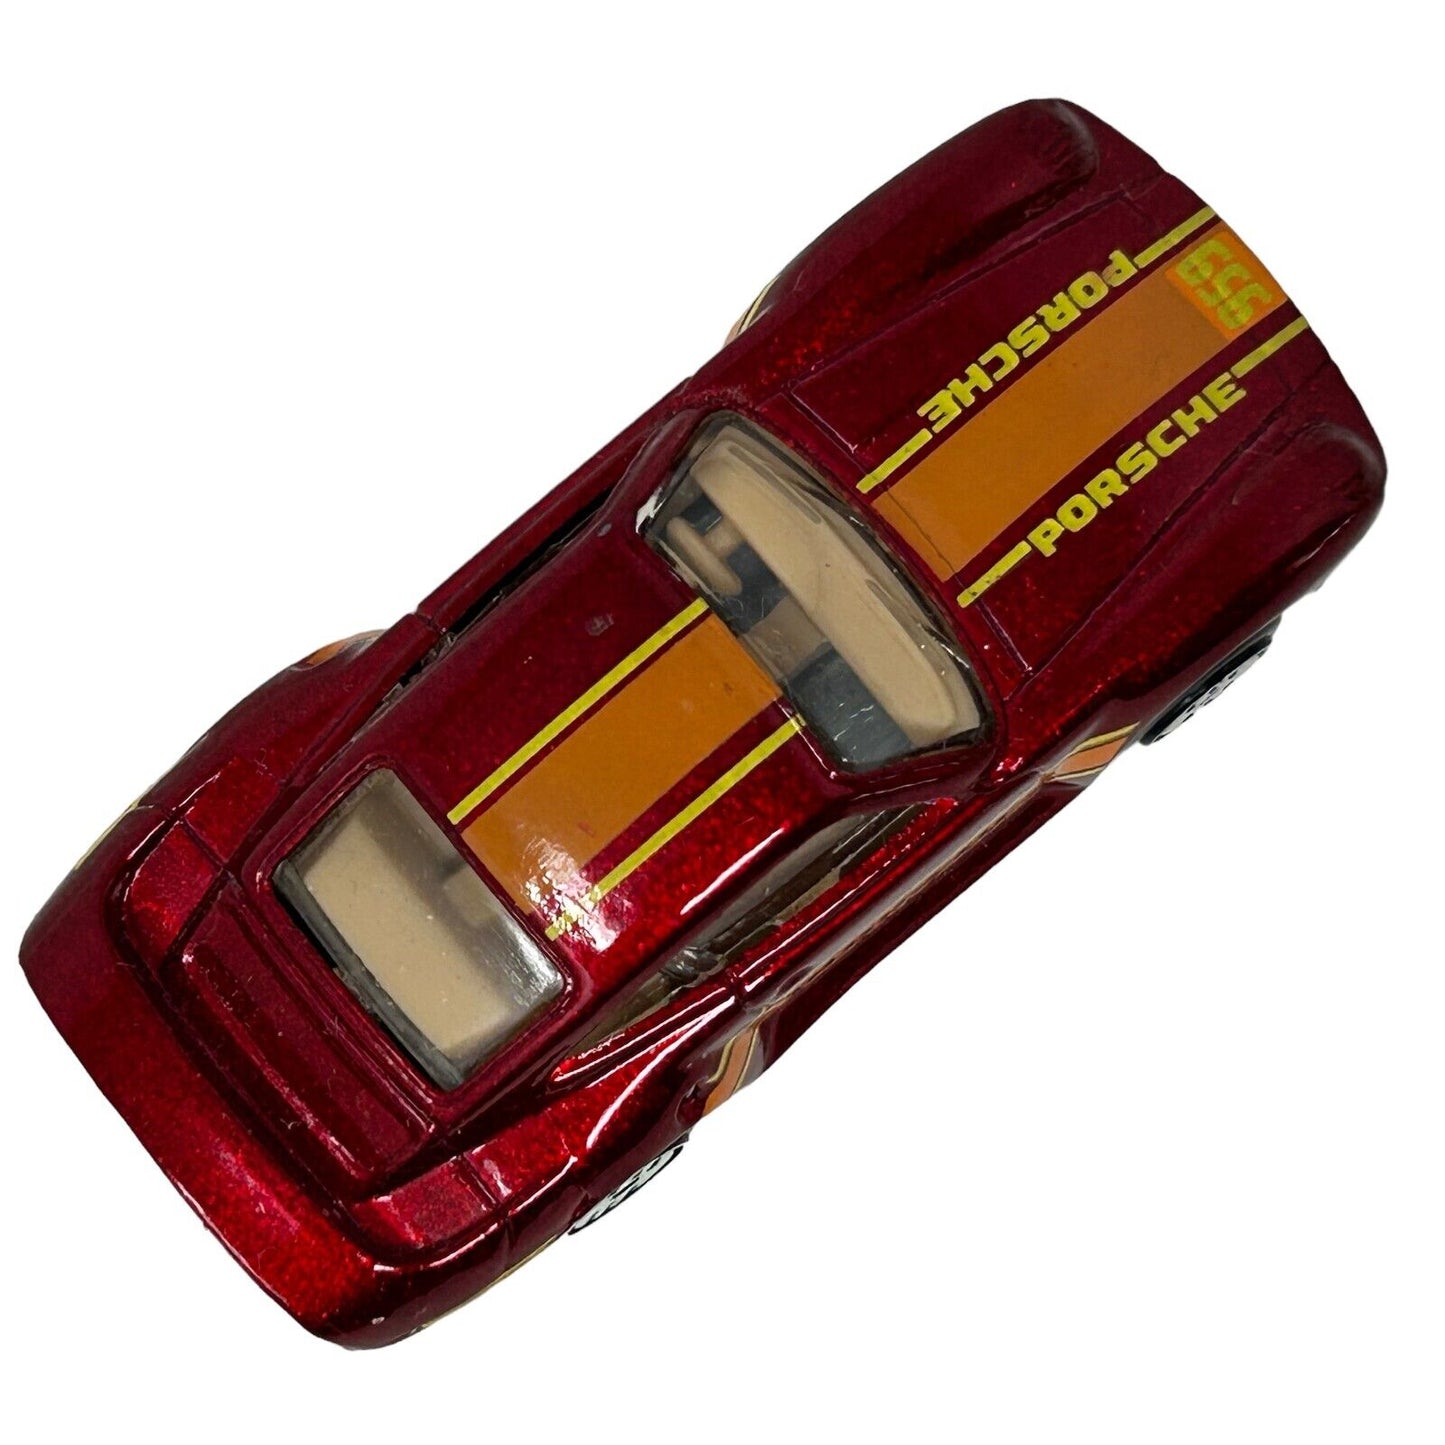 Porsche 959 Hot Wheels Collectible Diecast Car Red Toy Vehicle Vintage 80s